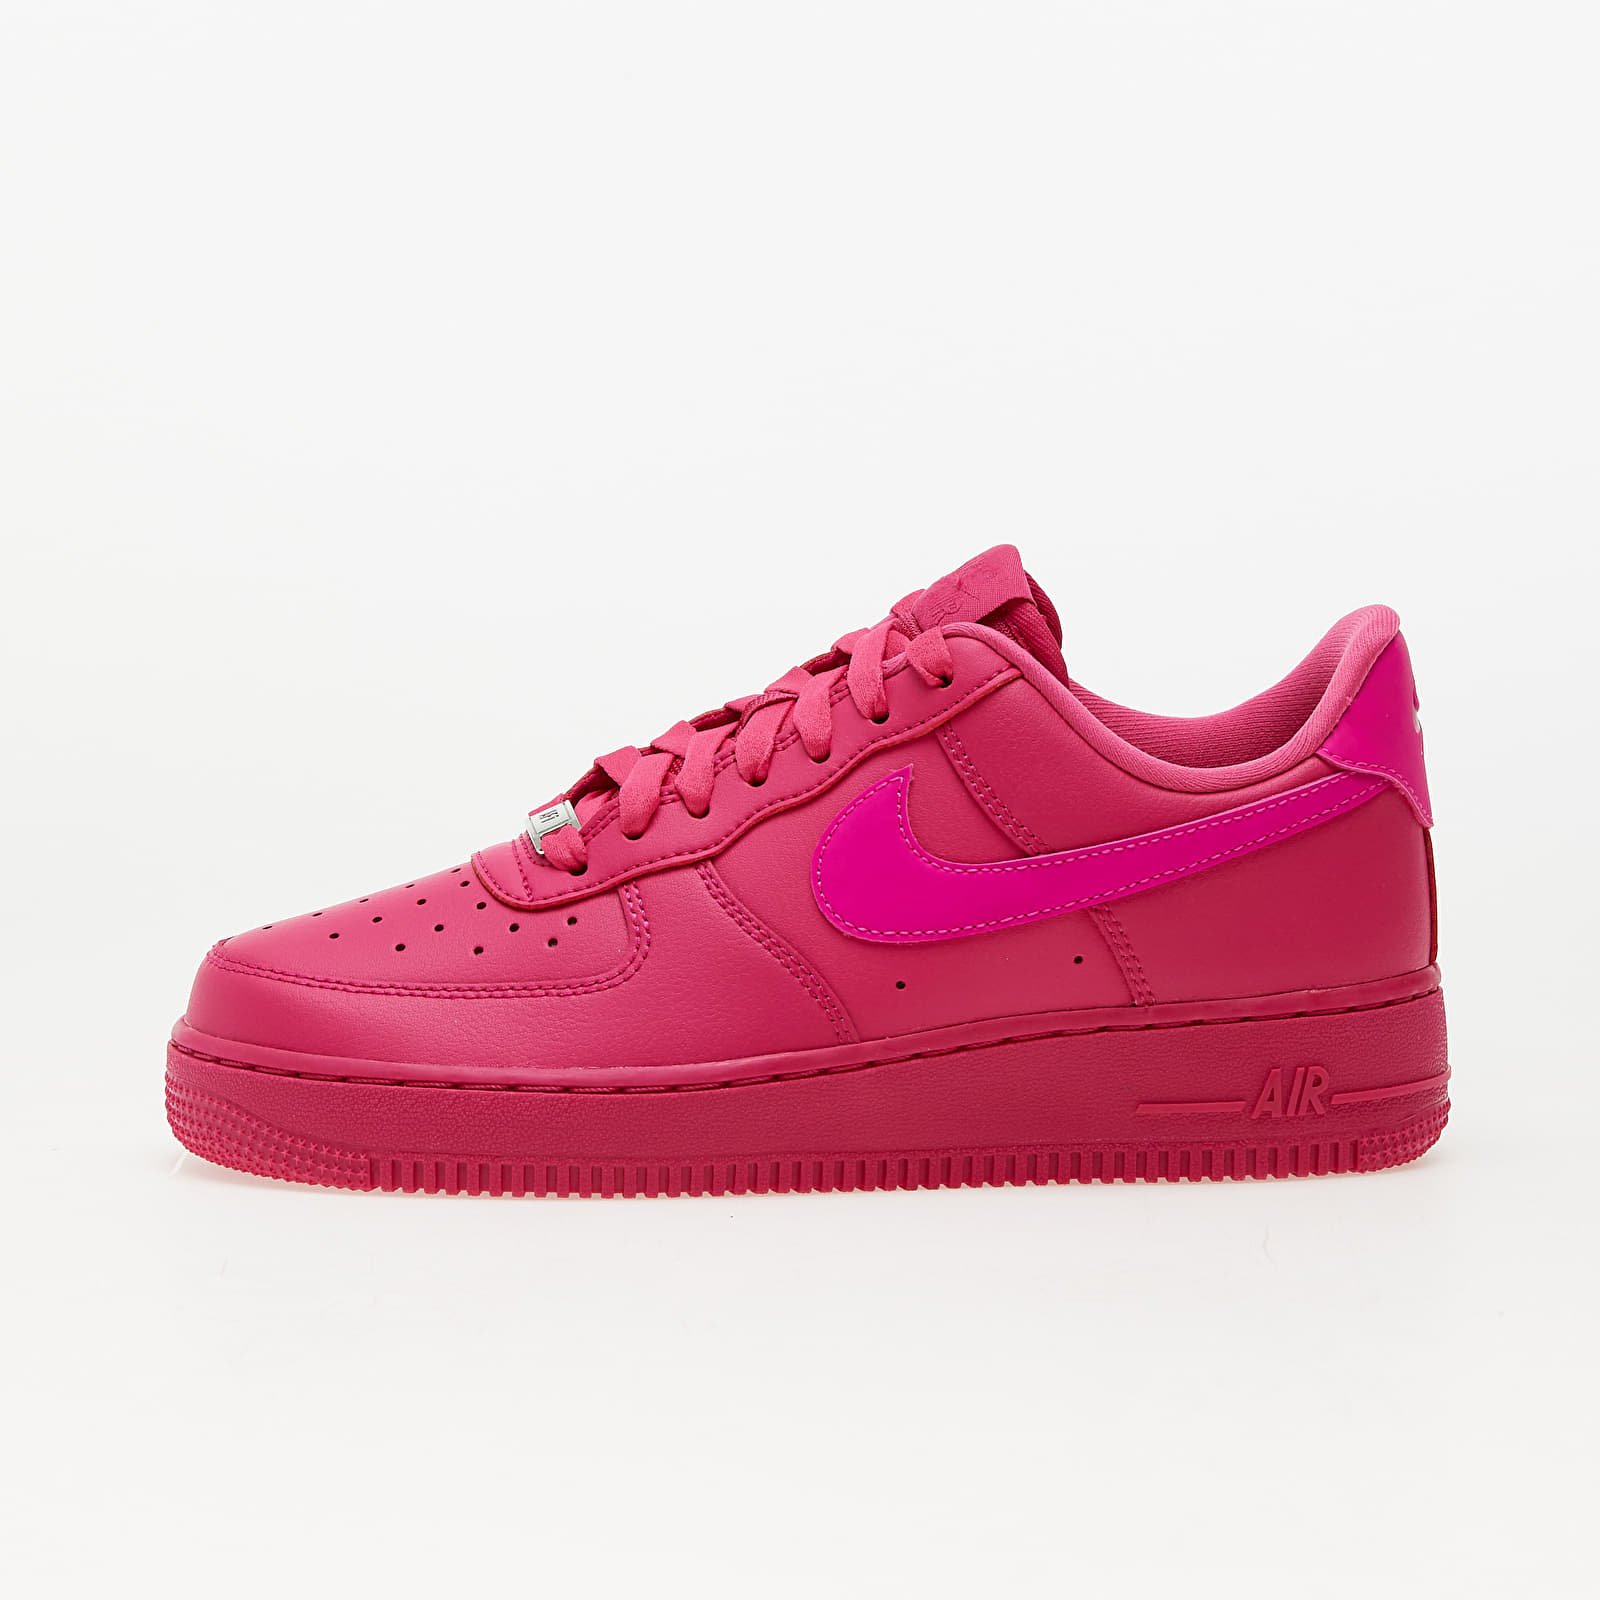 Zapatillas y zapatos de mujer Nike Air Force 1 '07 Fireberry/ Fierce Pink